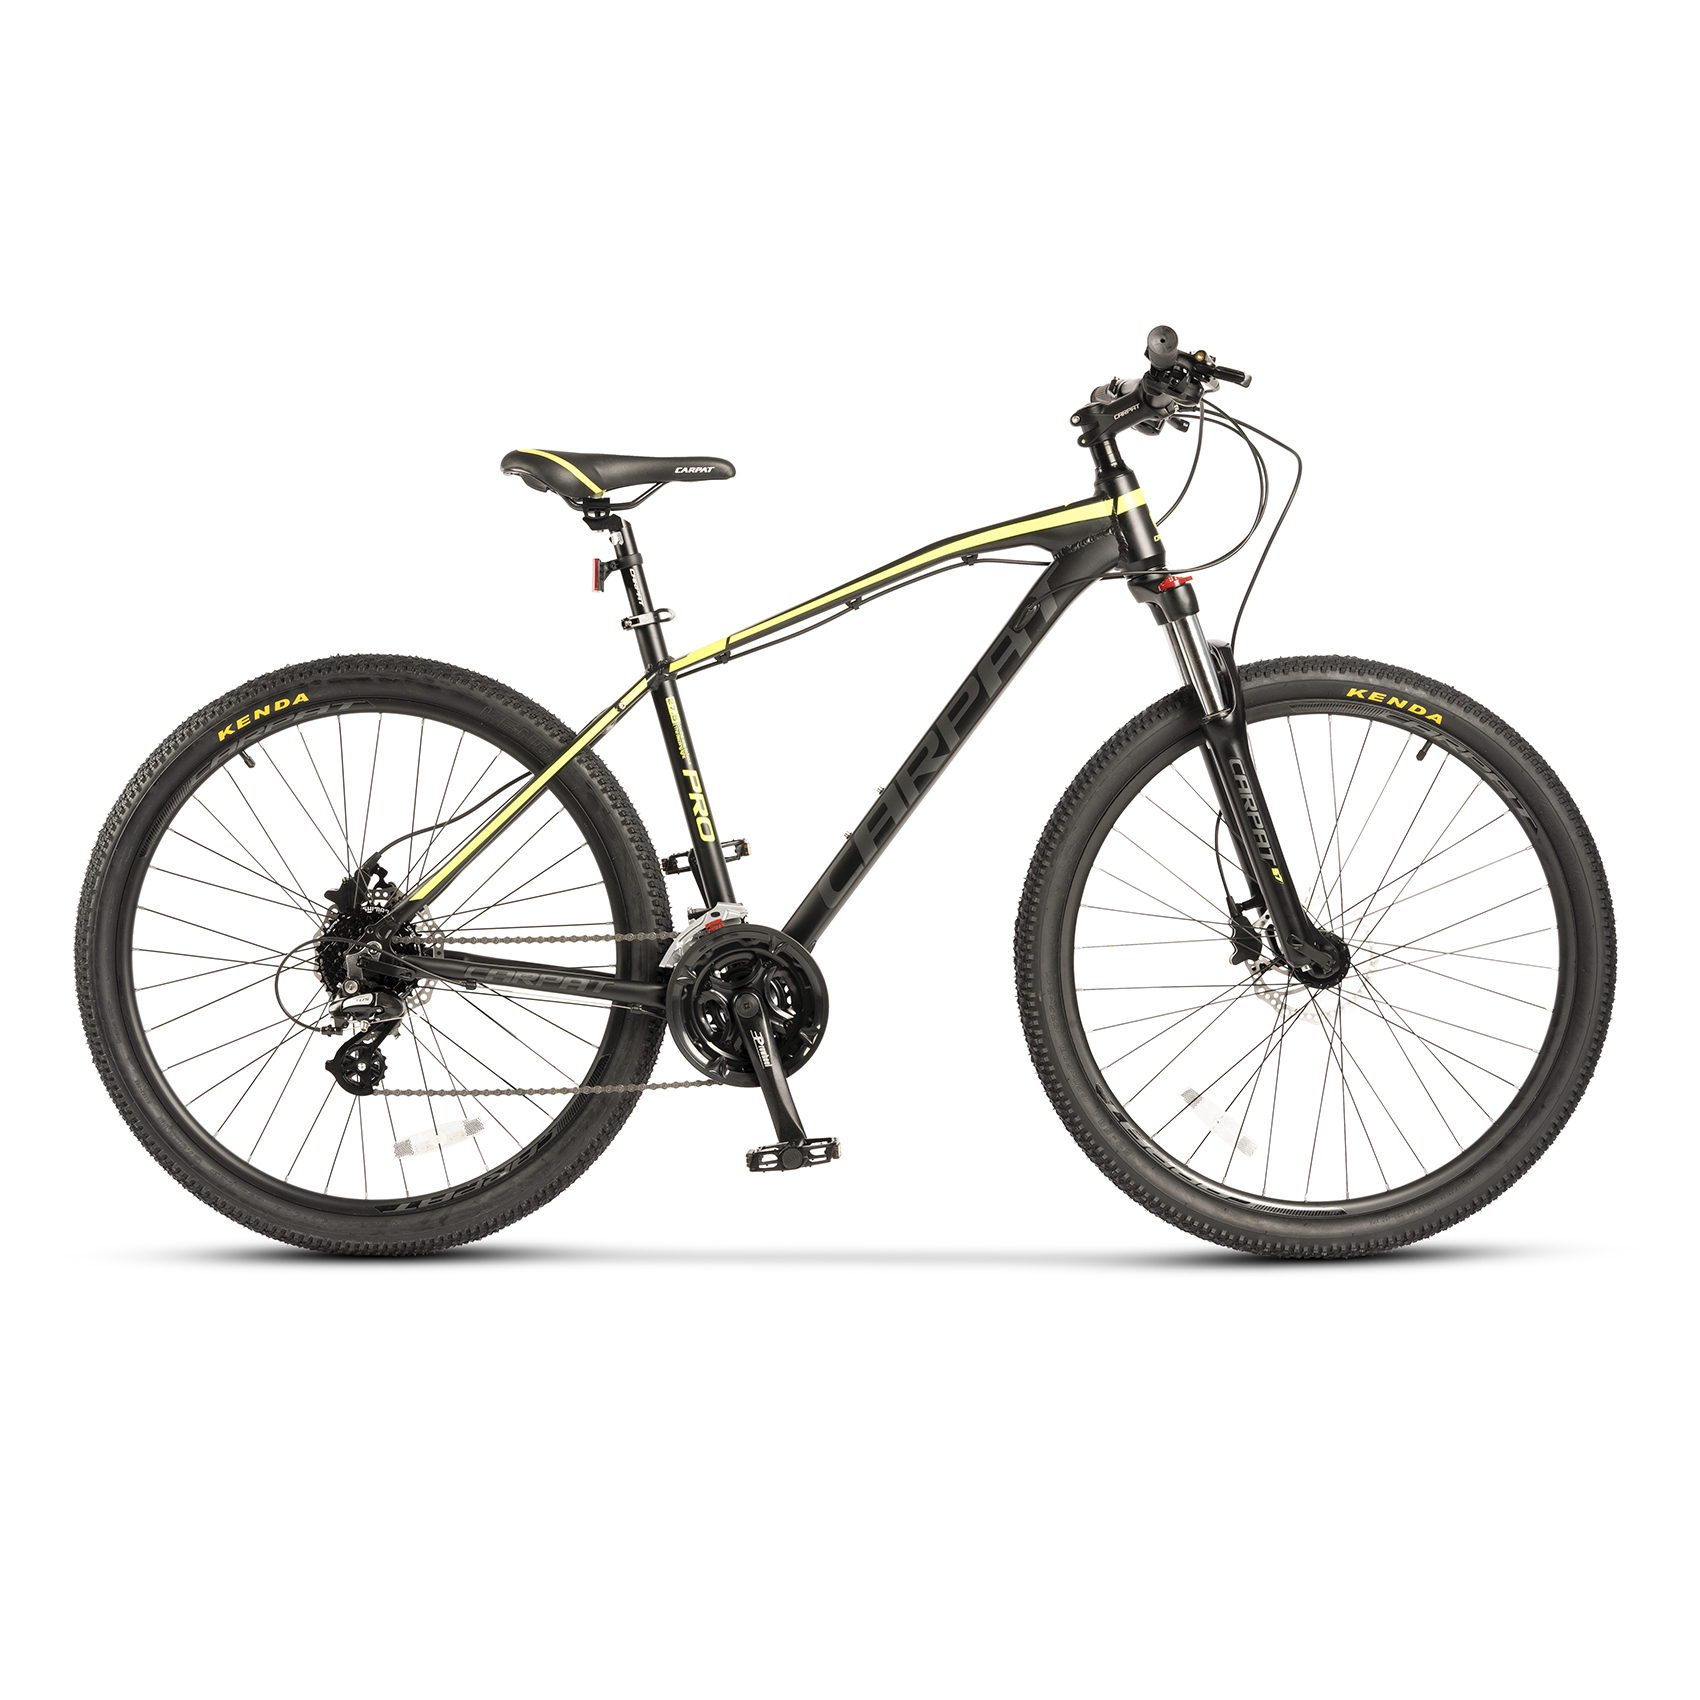 BICICLETE HIDRAULICE - Bicicleta MTB-HT Carpat PRO C27225H 27.5", Negru/Galben, https:carpatsport.ro